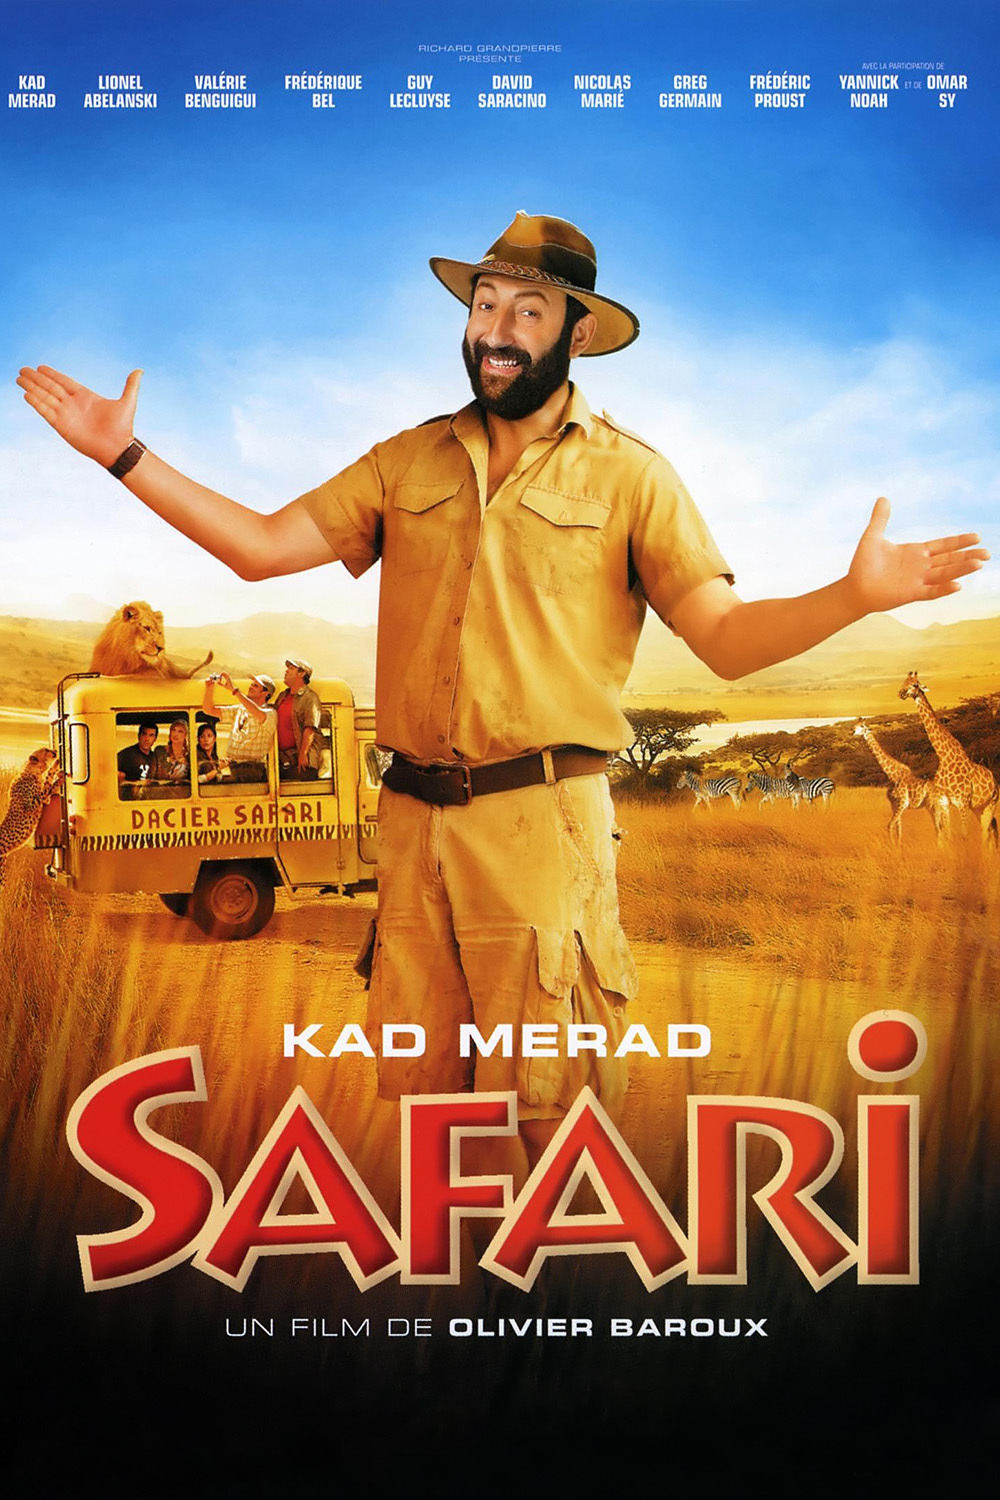 Poster for the movie "Safari"